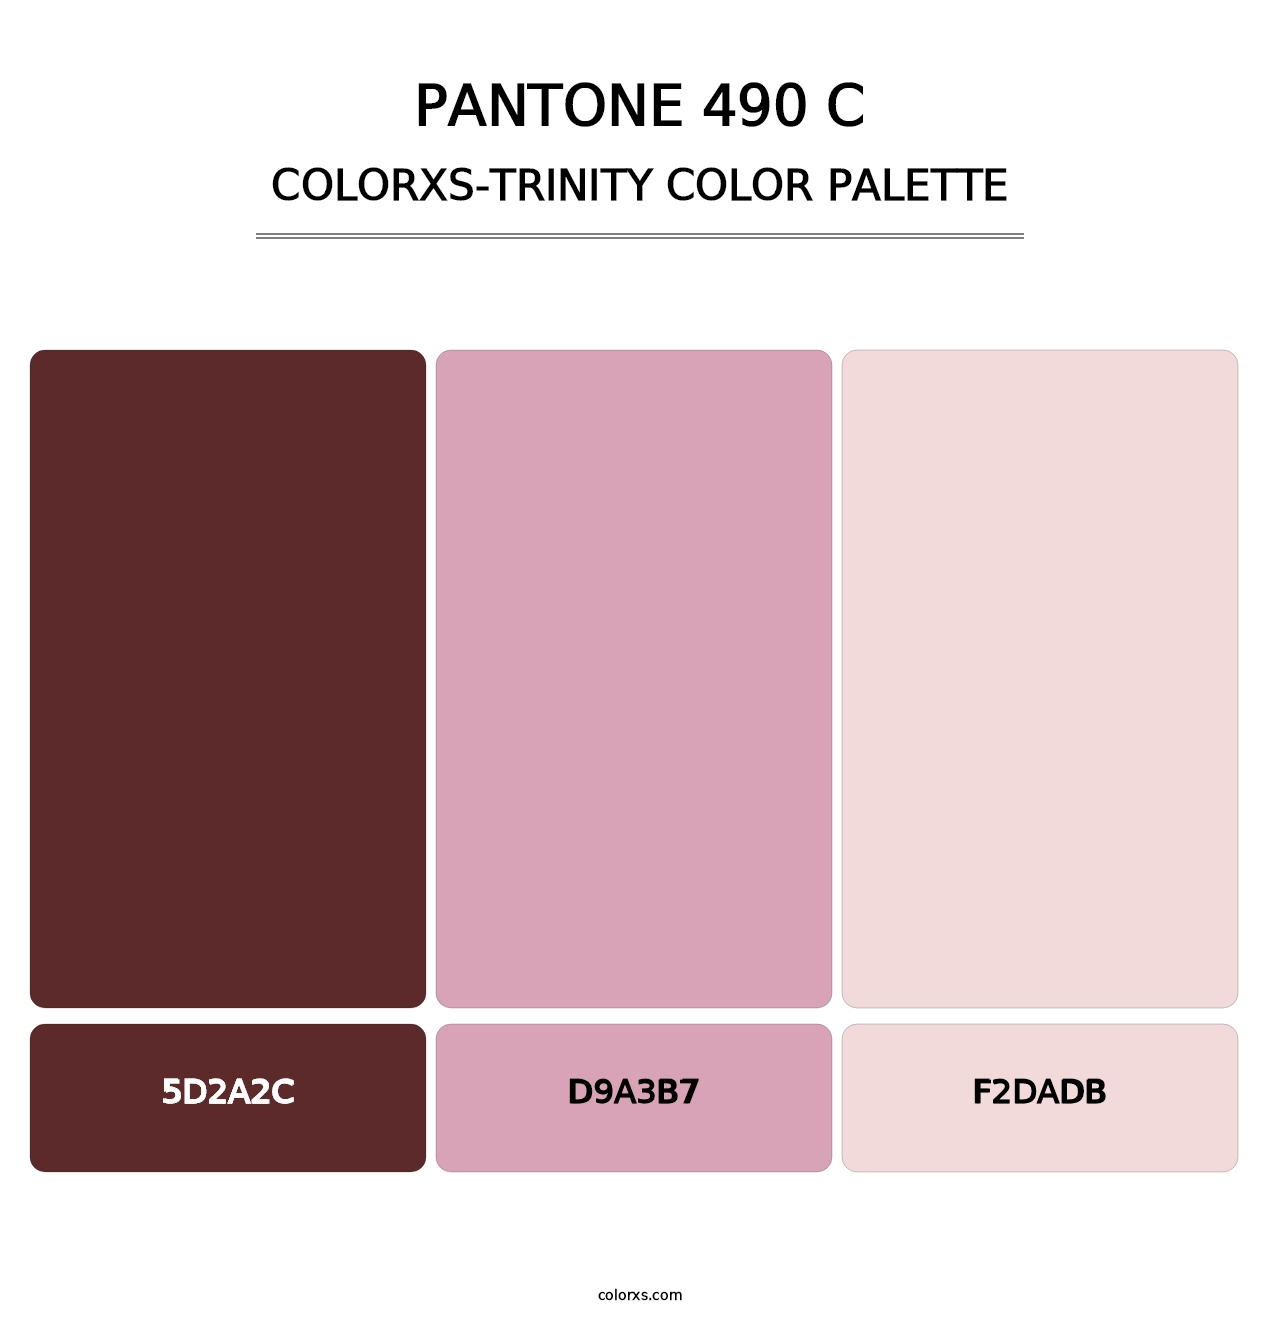 PANTONE 490 C - Colorxs Trinity Palette